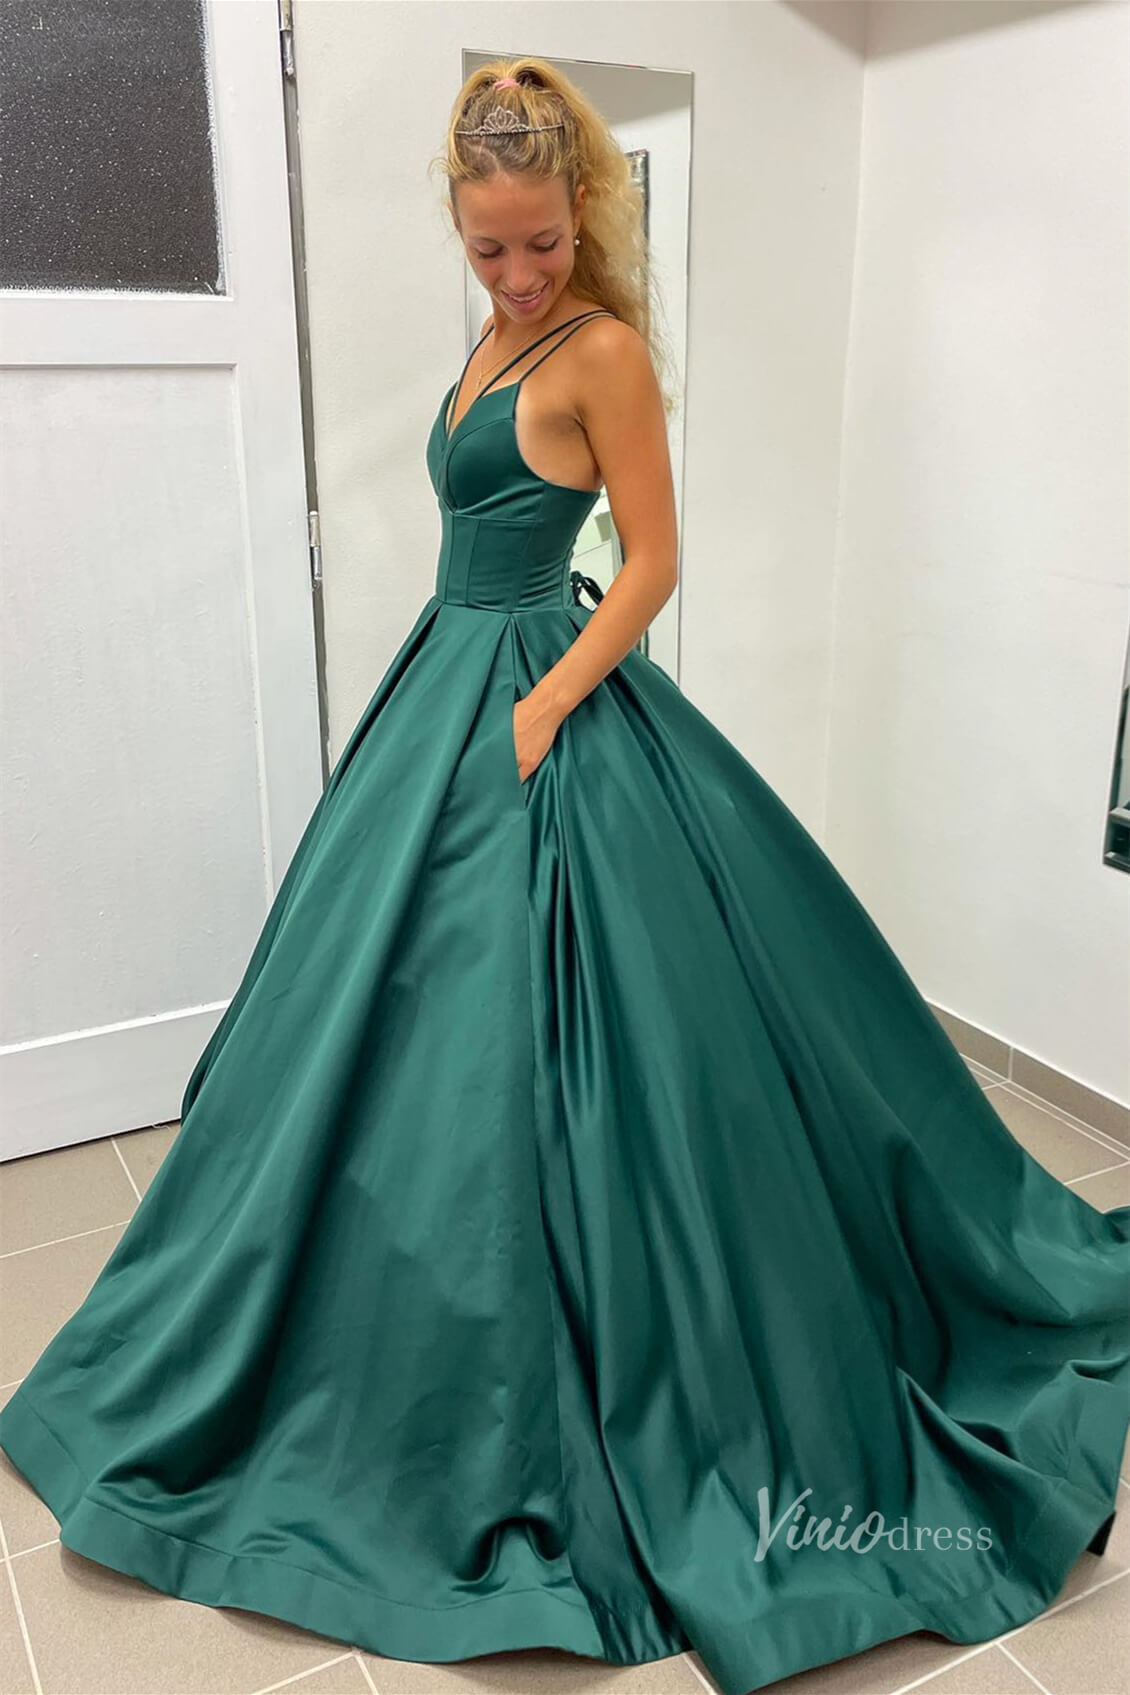 Green Satin Cheap Prom Dresses Spaghetti Strap Corset Back FD3992-prom dresses-Viniodress-Viniodress